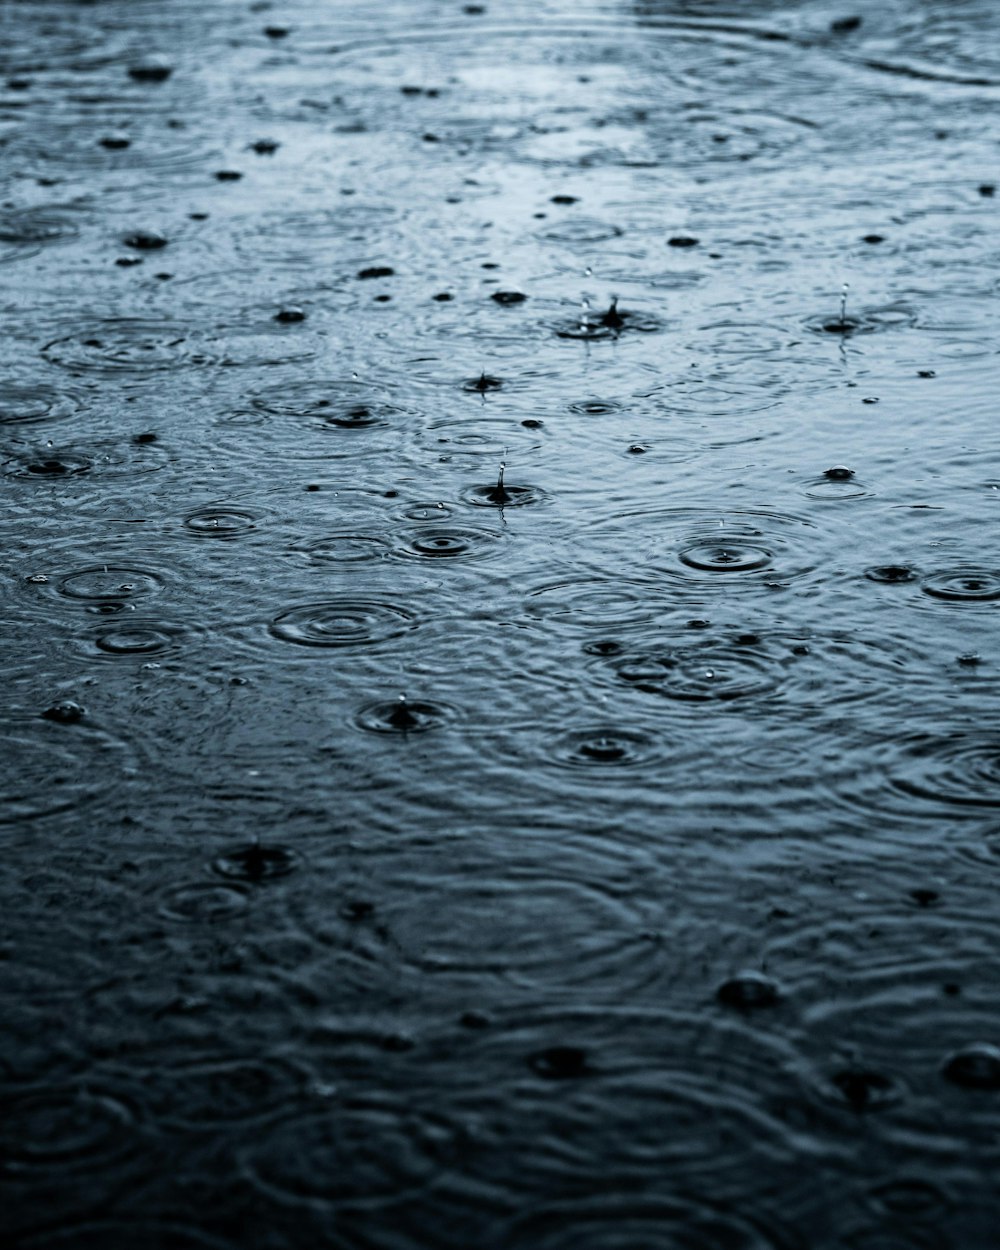 Las gotas de lluvia caen sobre una superficie mojada